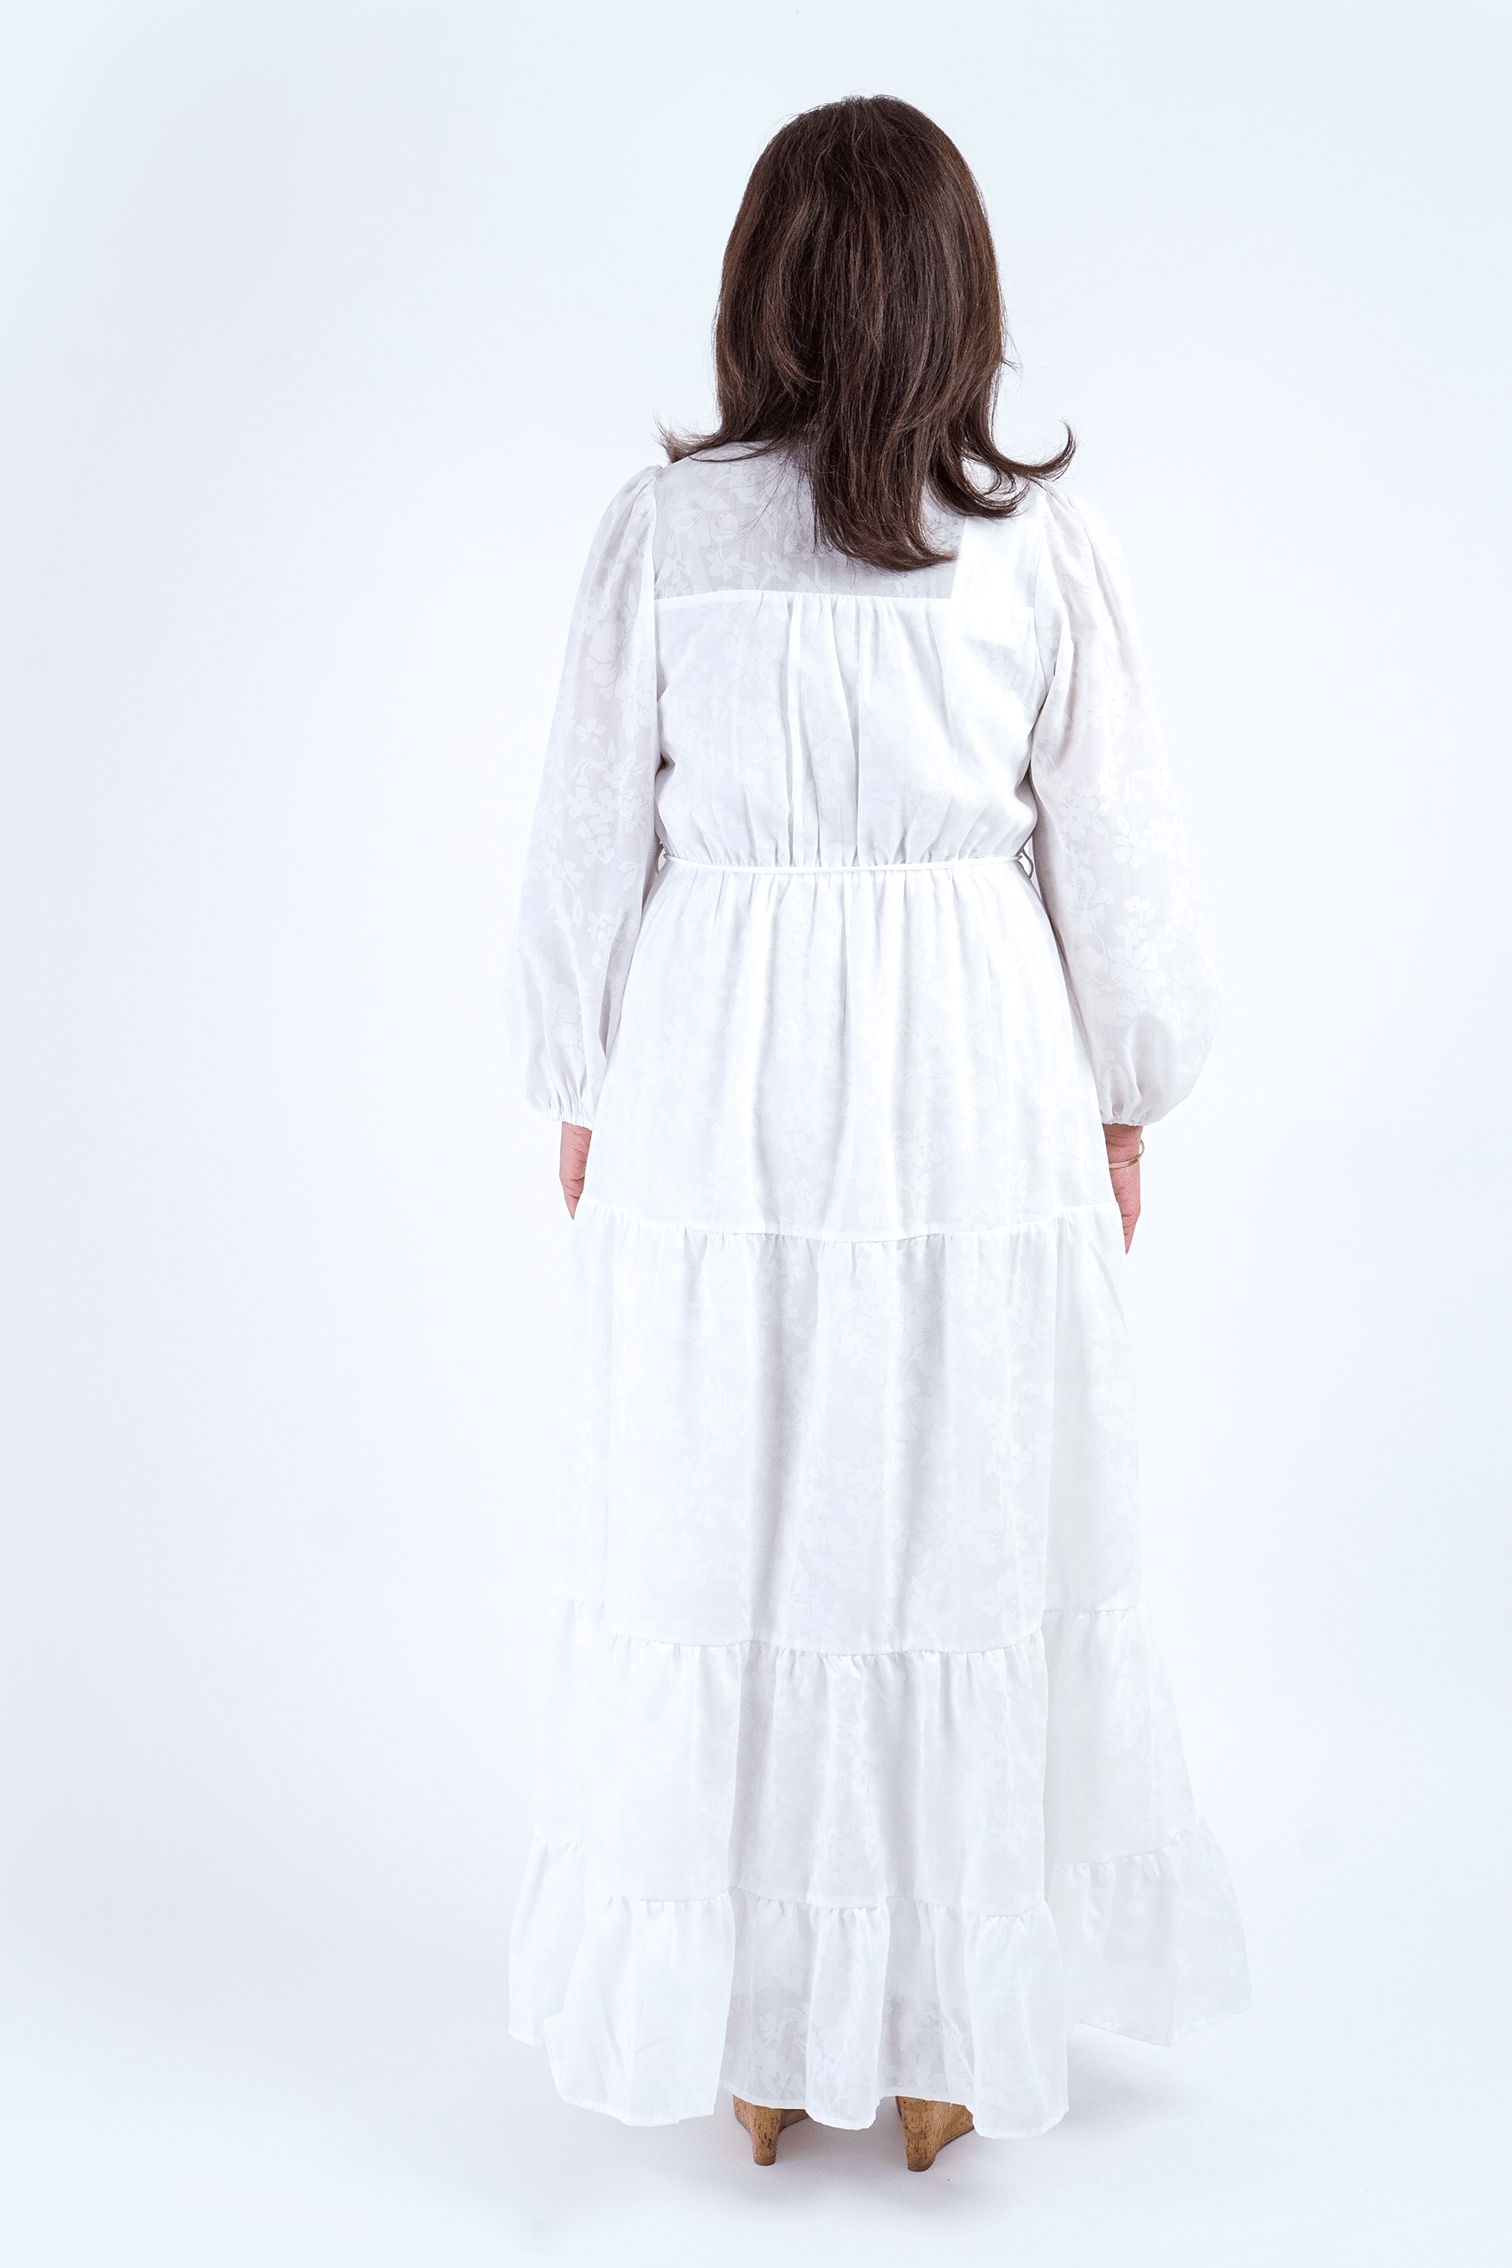 Chloe Dao Boutique DRESSES White Hidden Button Ballon Sleeve Long Dress